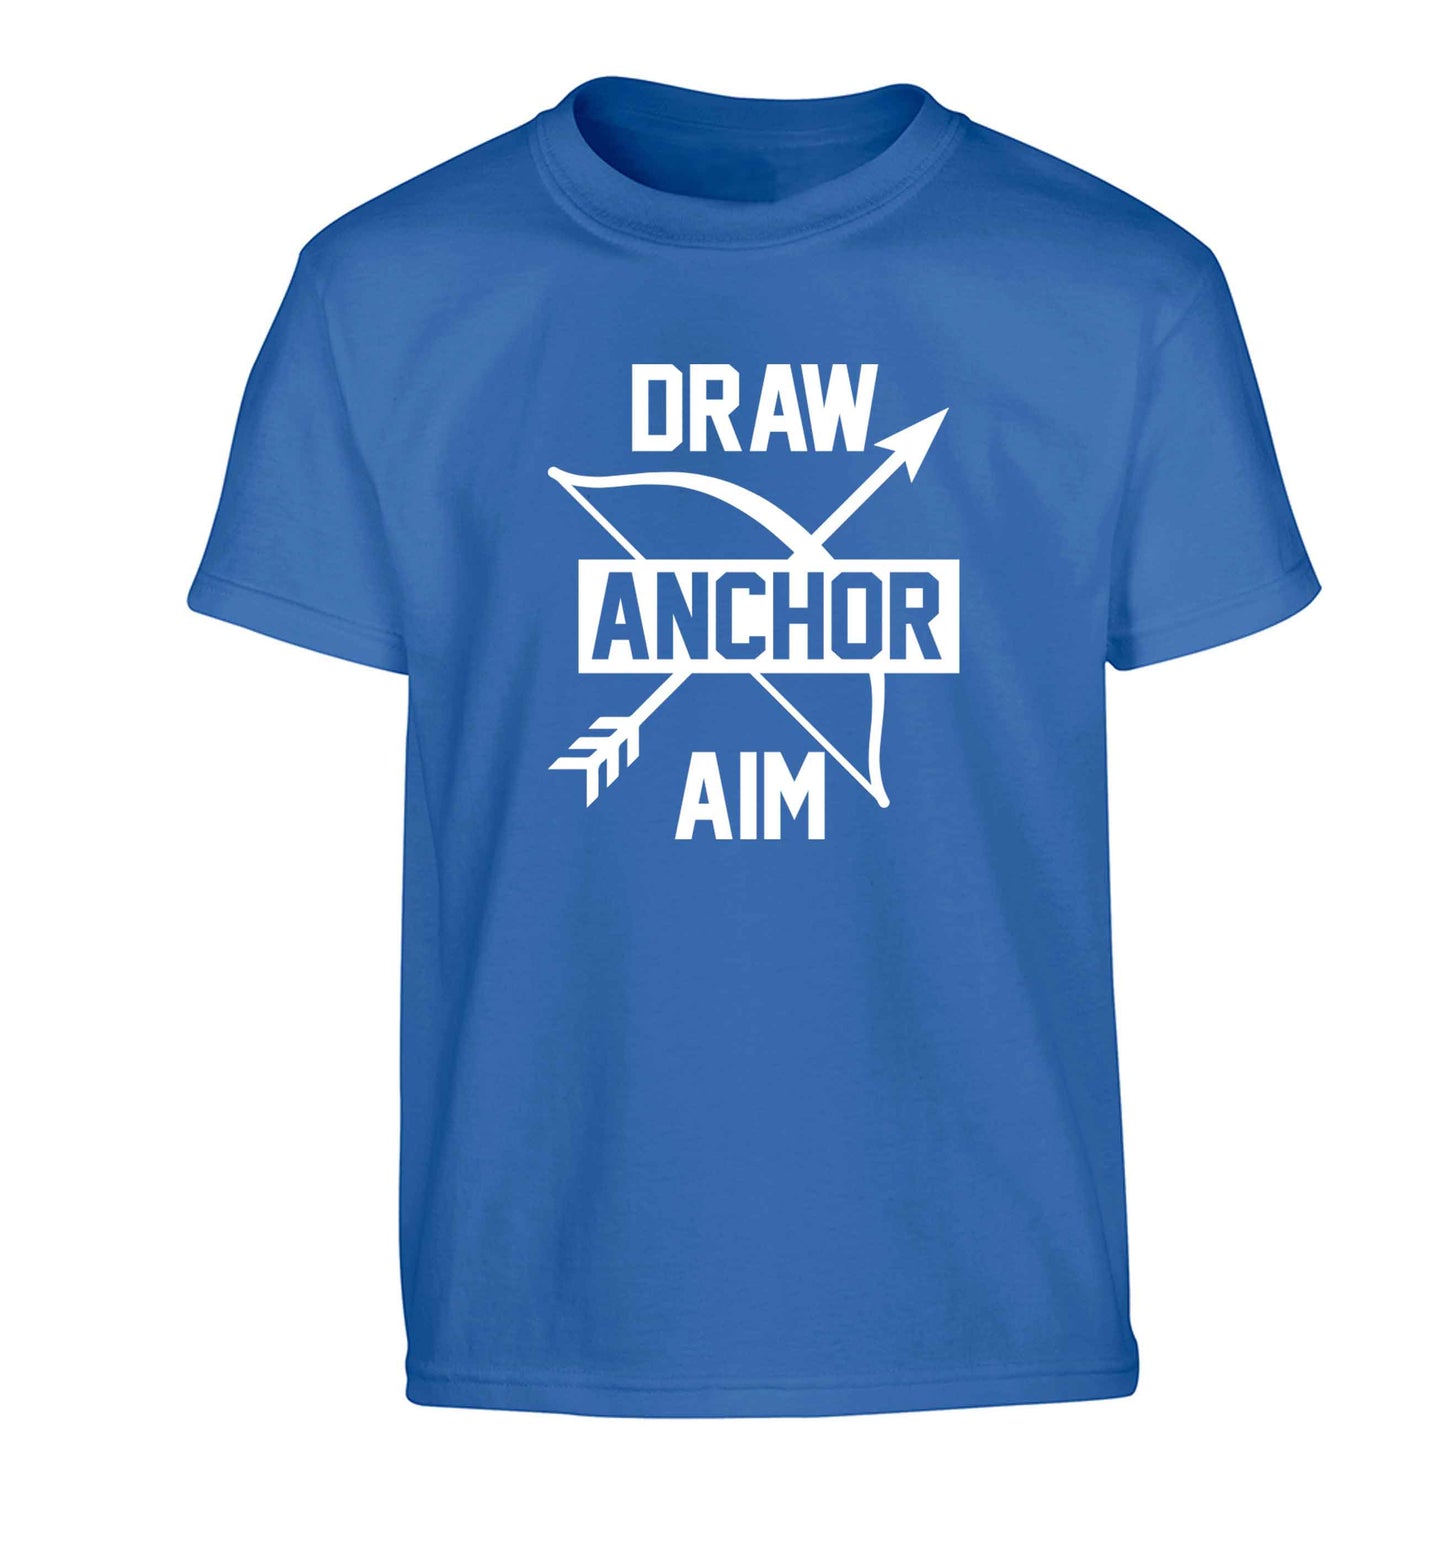 Draw anchor aim Children's blue Tshirt 12-13 Years